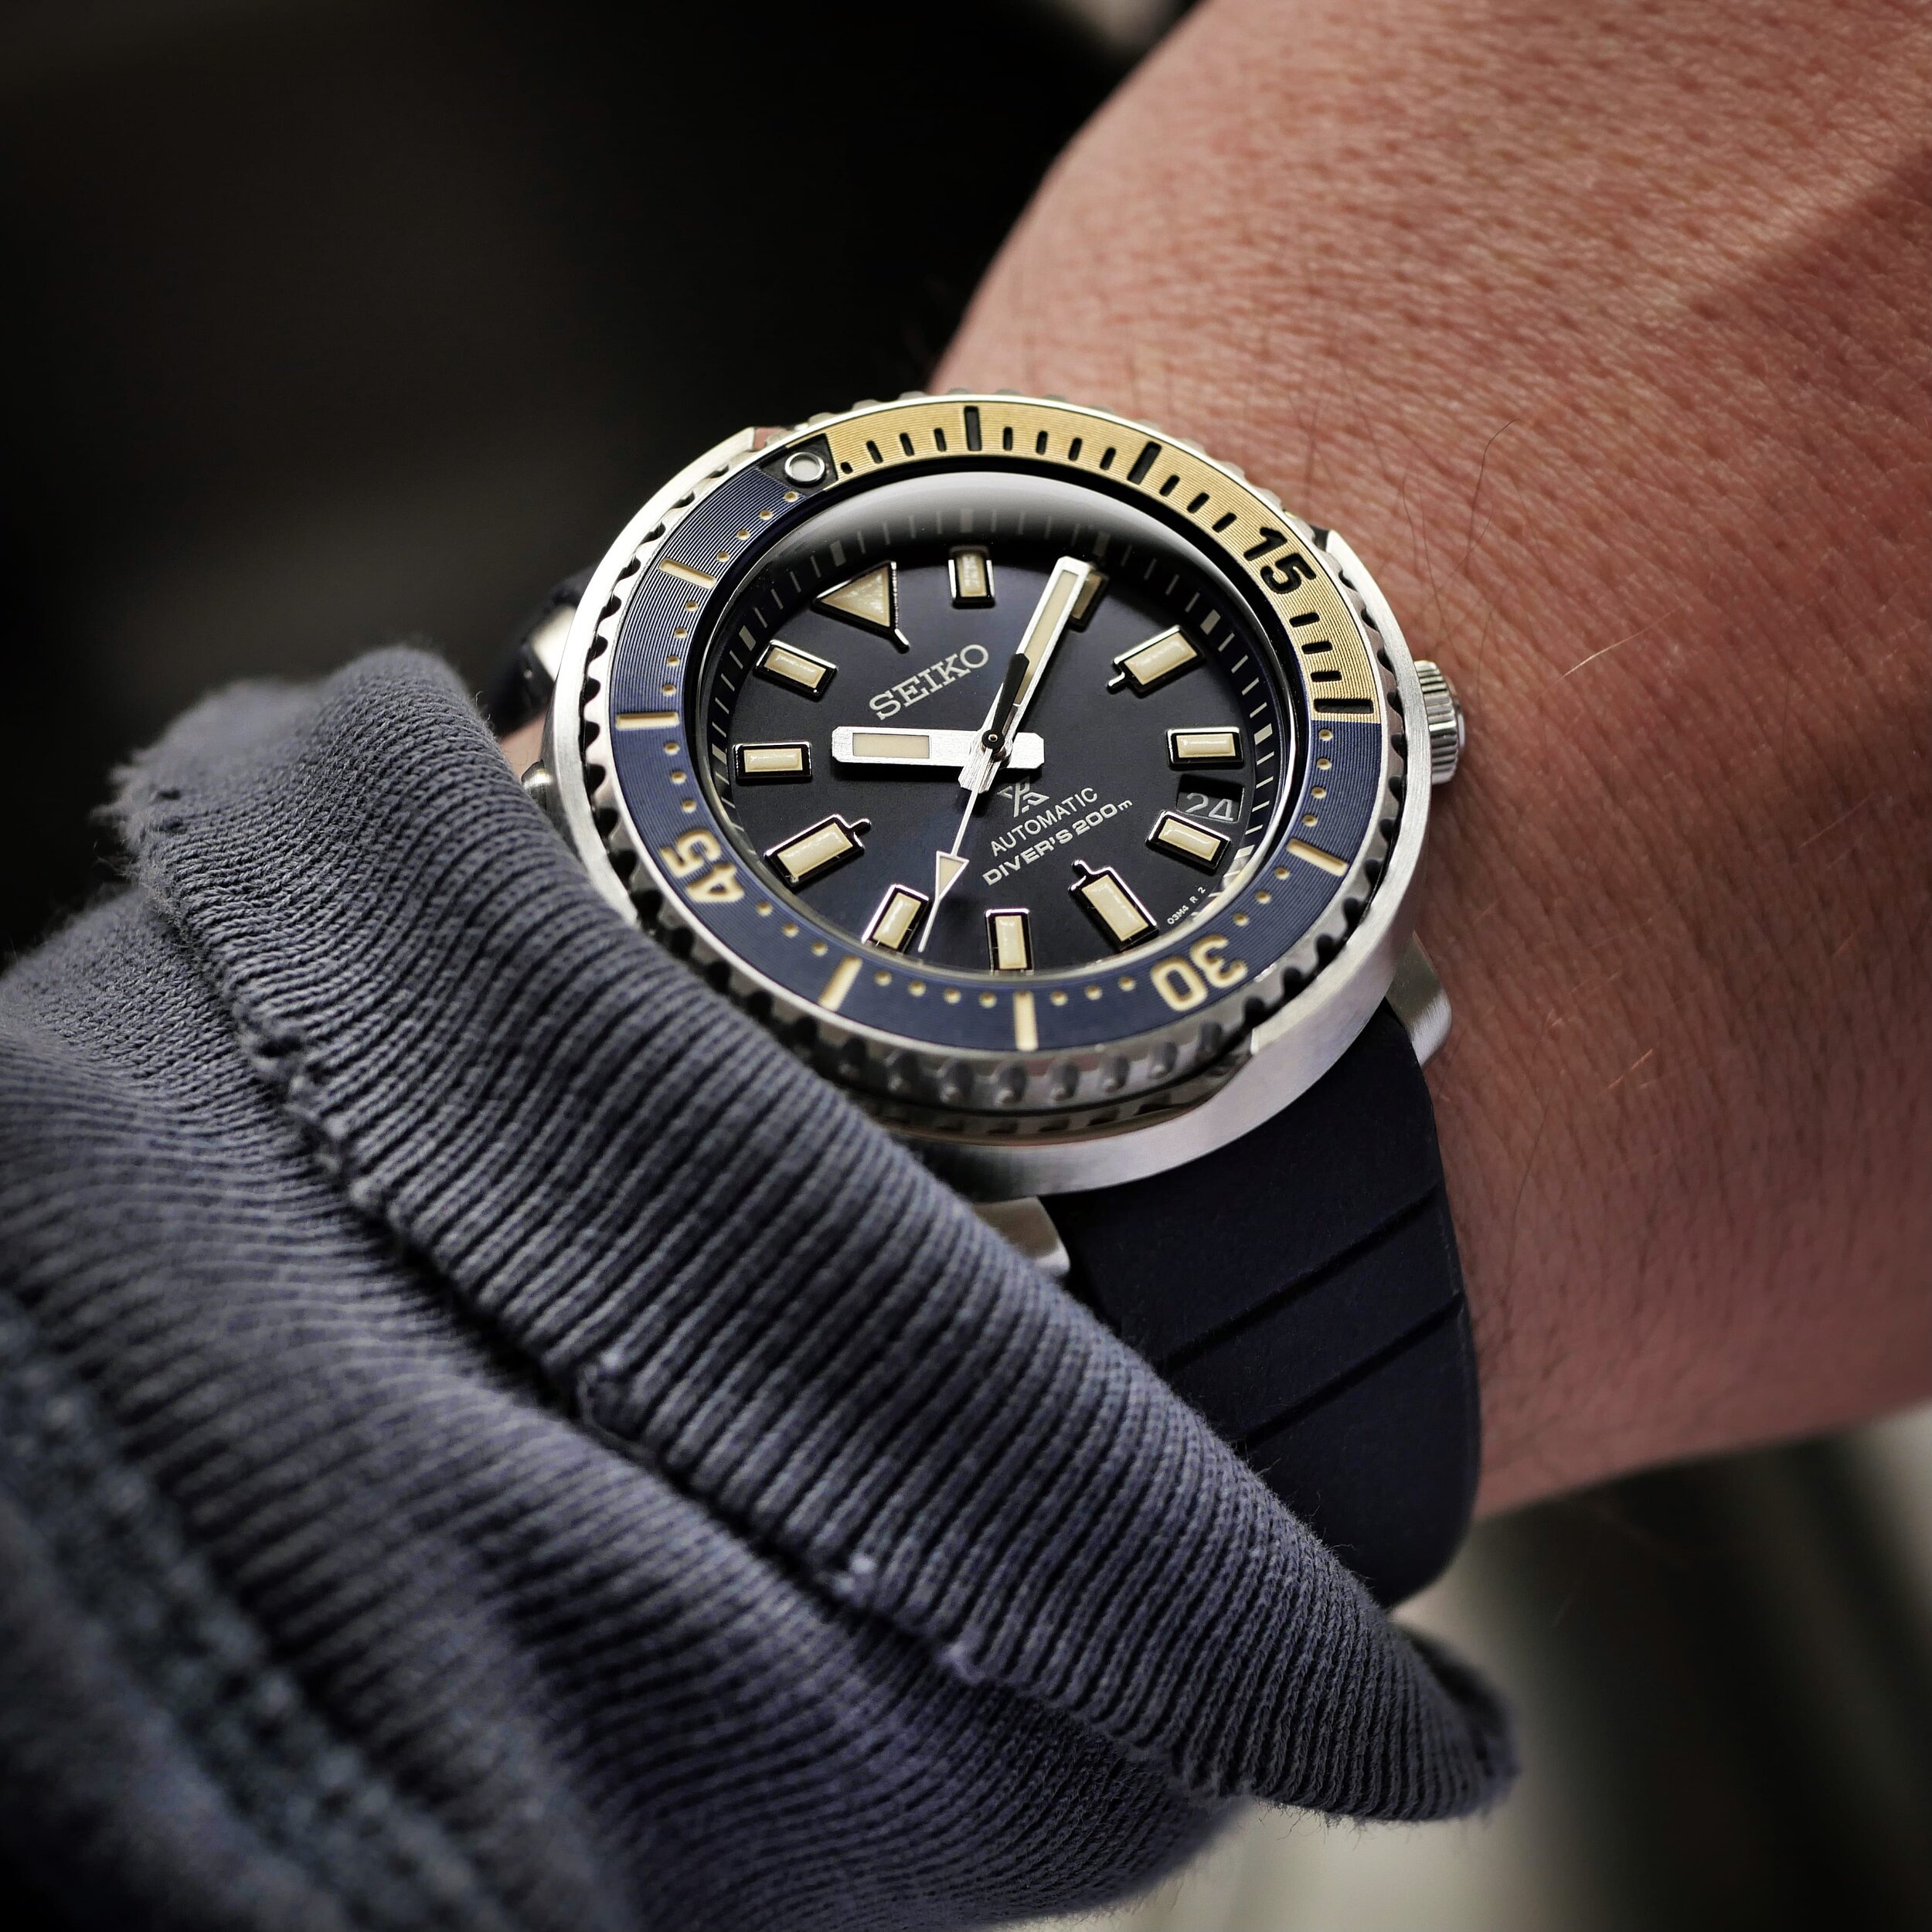 Bemyndige tåbelig redaktionelle Are Seiko solar watches good? — MTR Watches